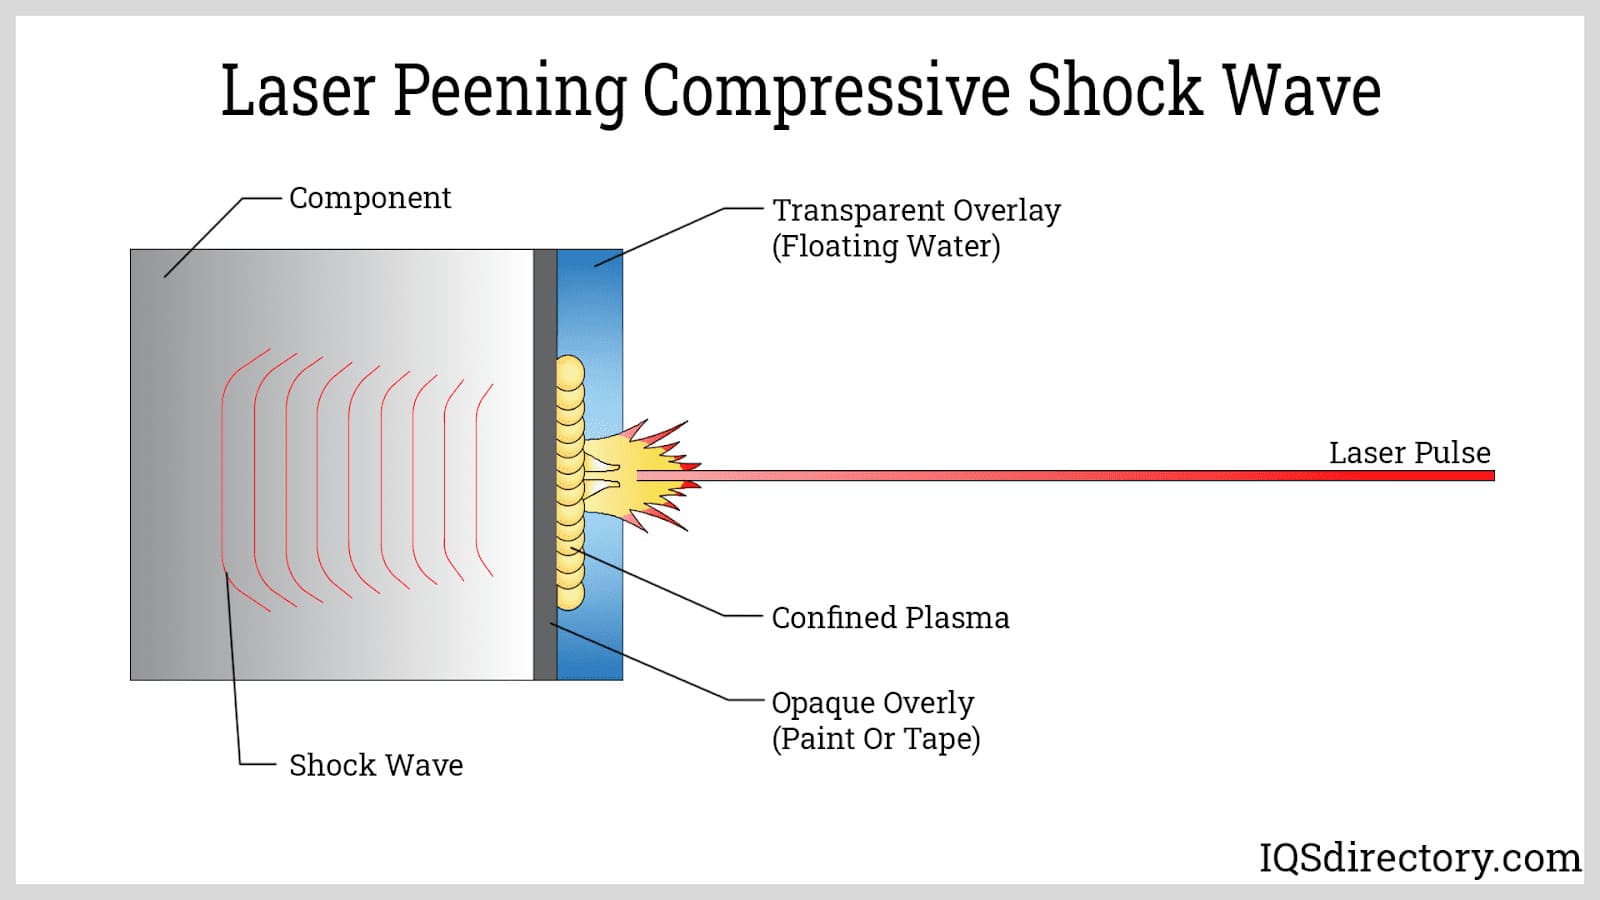 Laser Peening Compressive Shock Wave